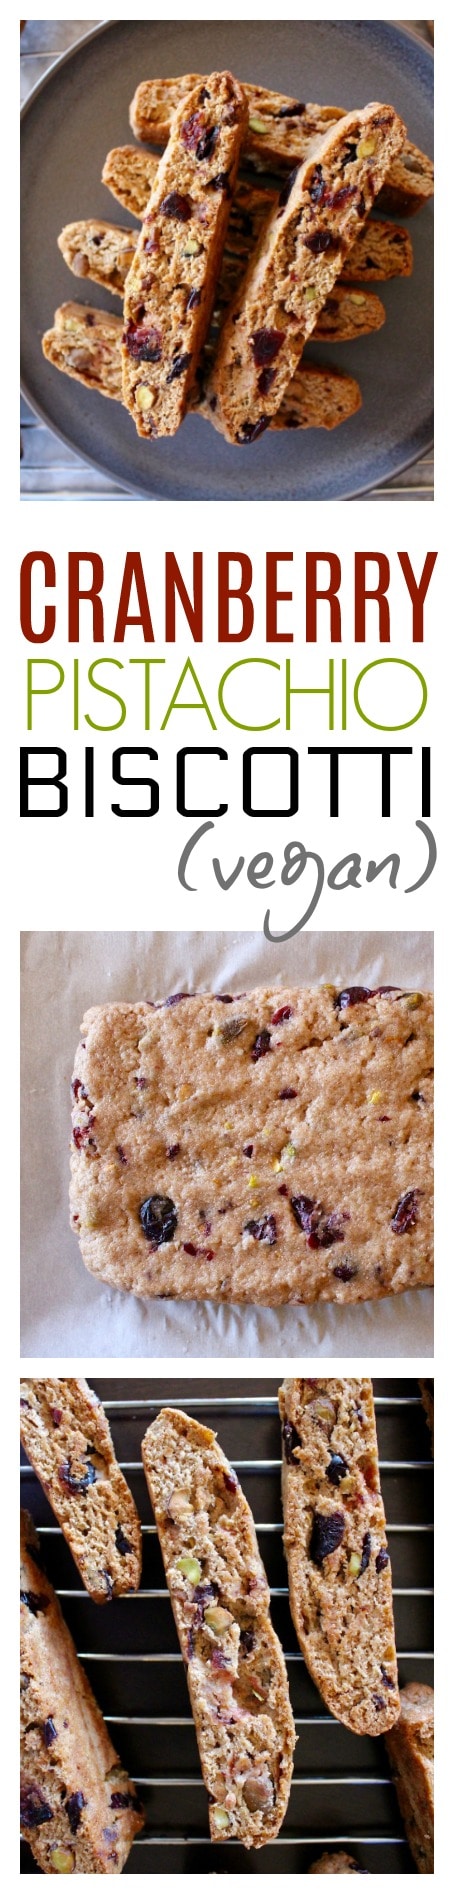 Vegan Cranberry Pistachio Biscotti title images